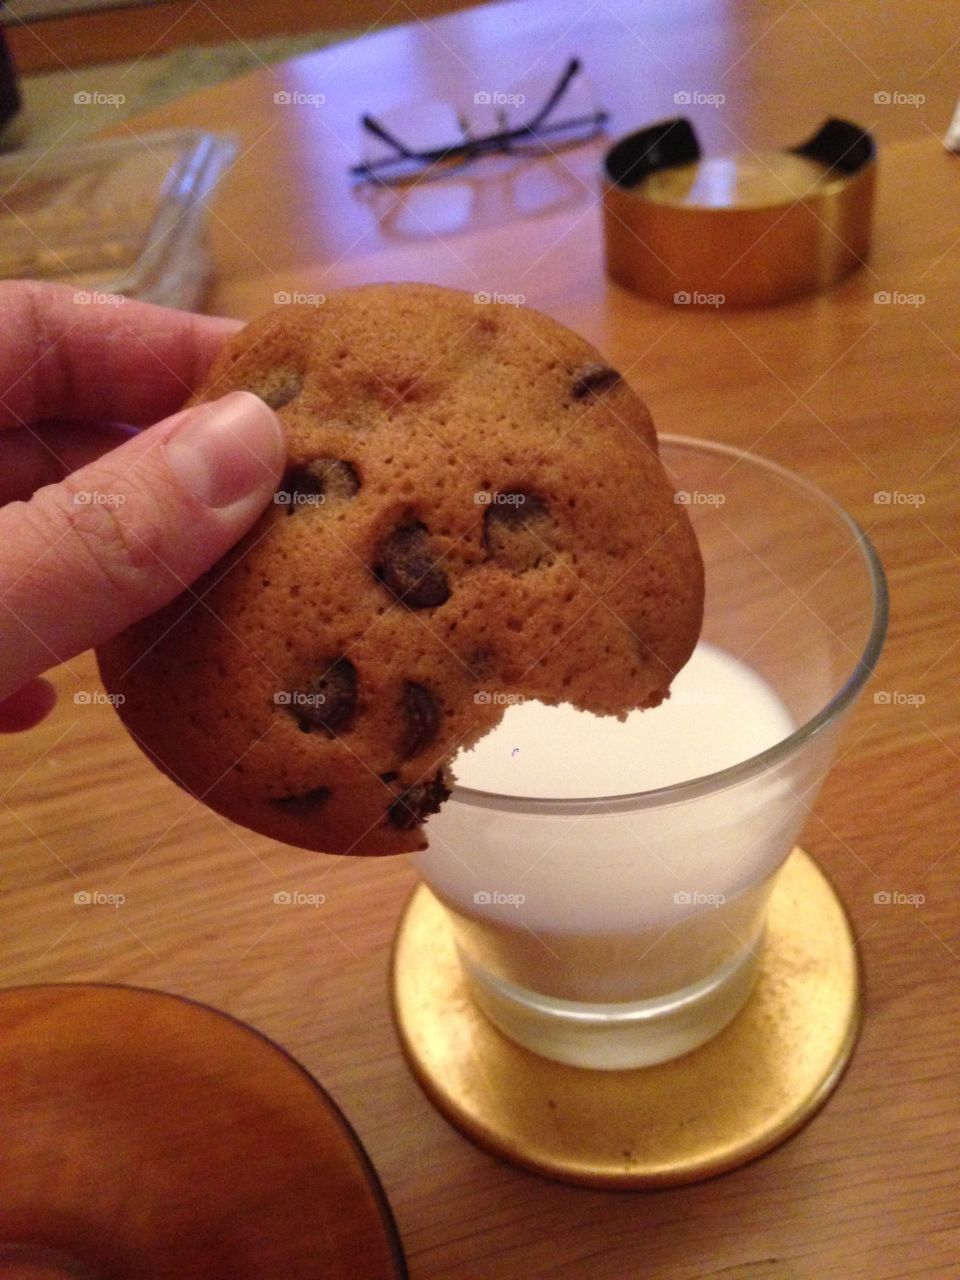 Cookies and milk! 🍪 